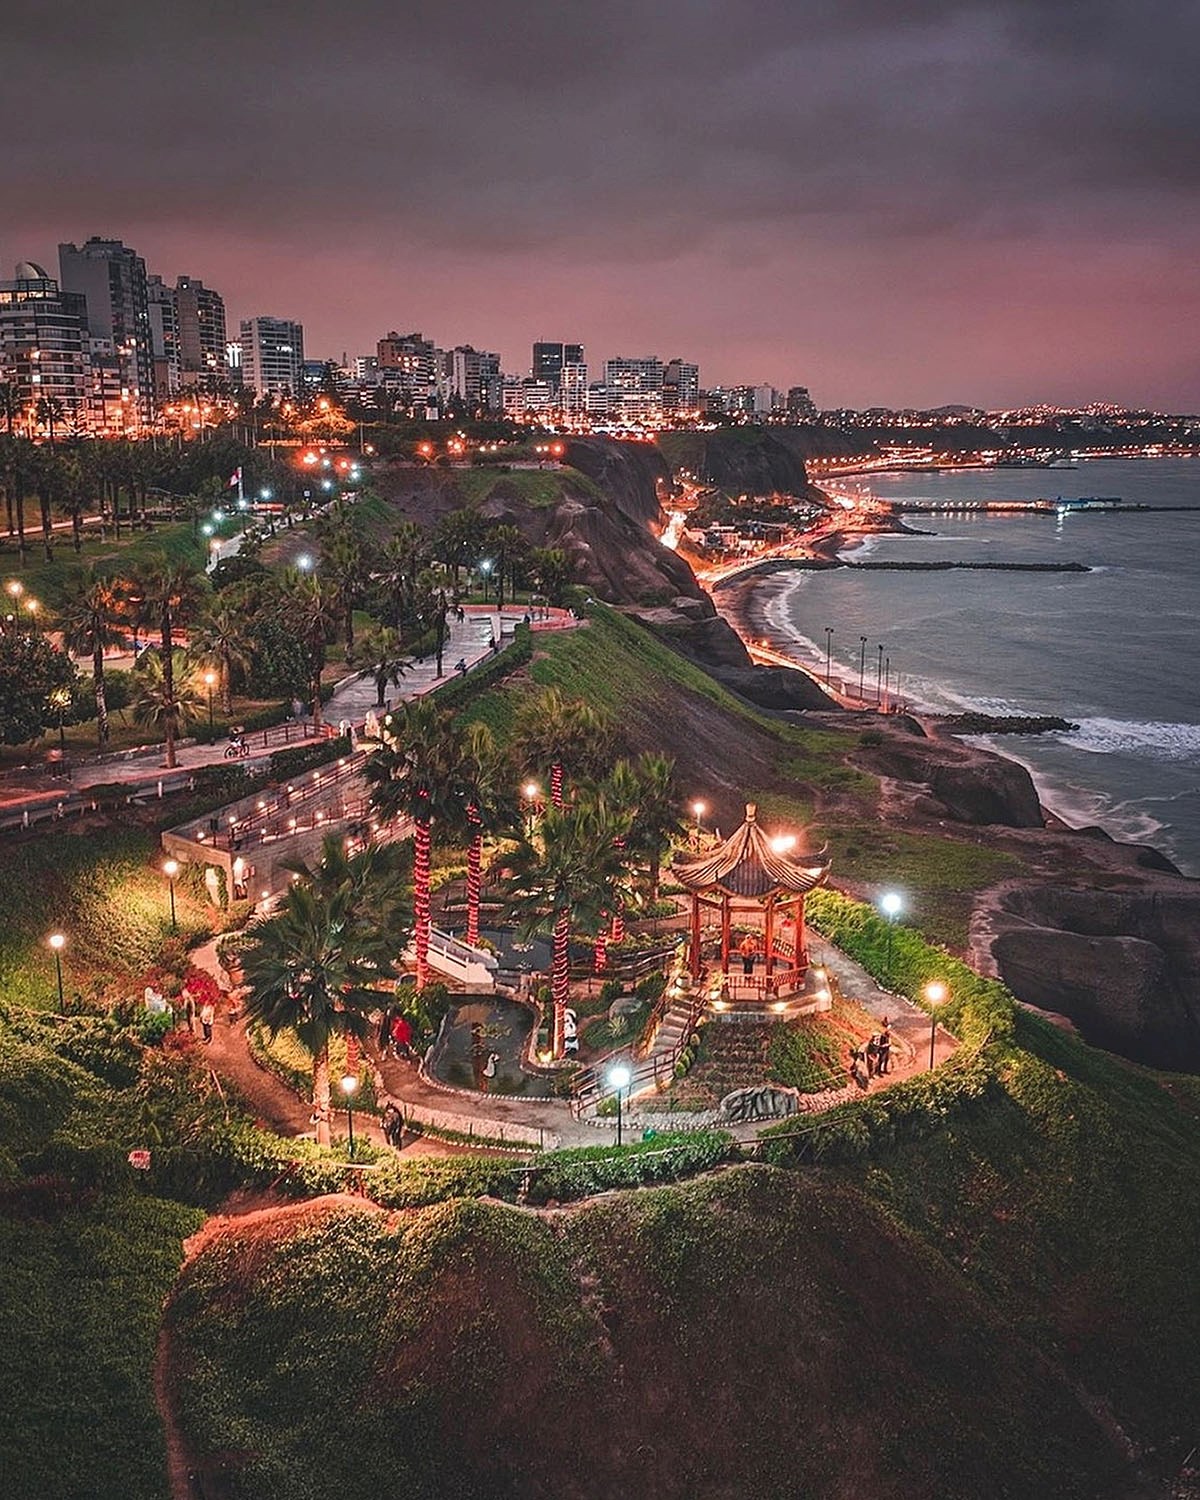 Parque Chino in Miraflores - 